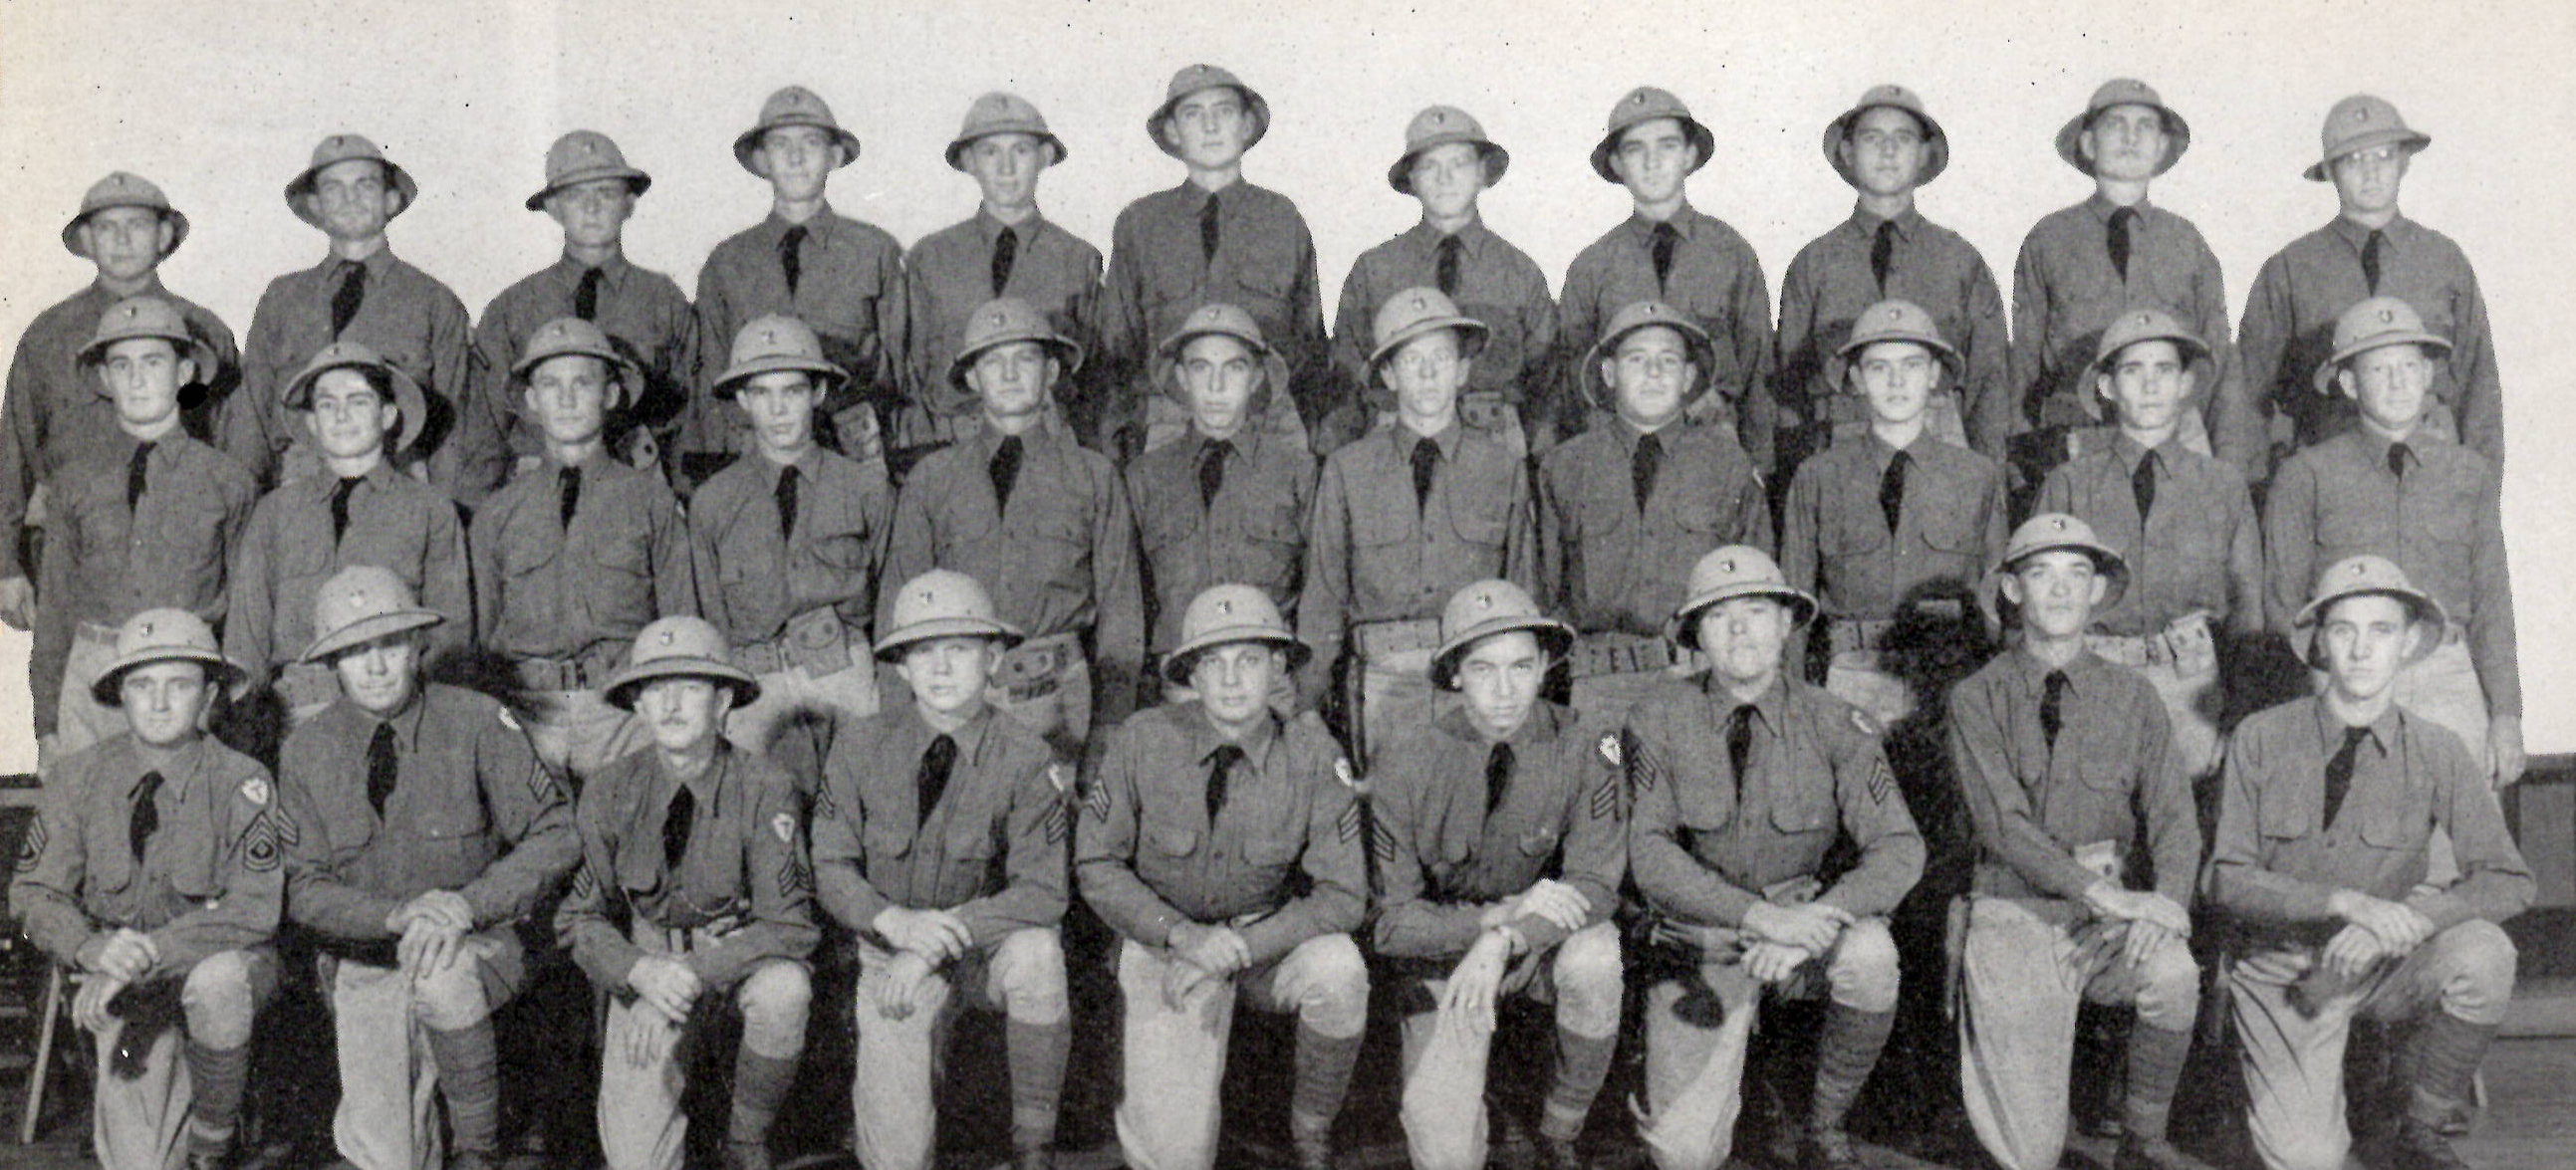 Company M 141st Infantry Regiment 36th Infantry Division - 1940